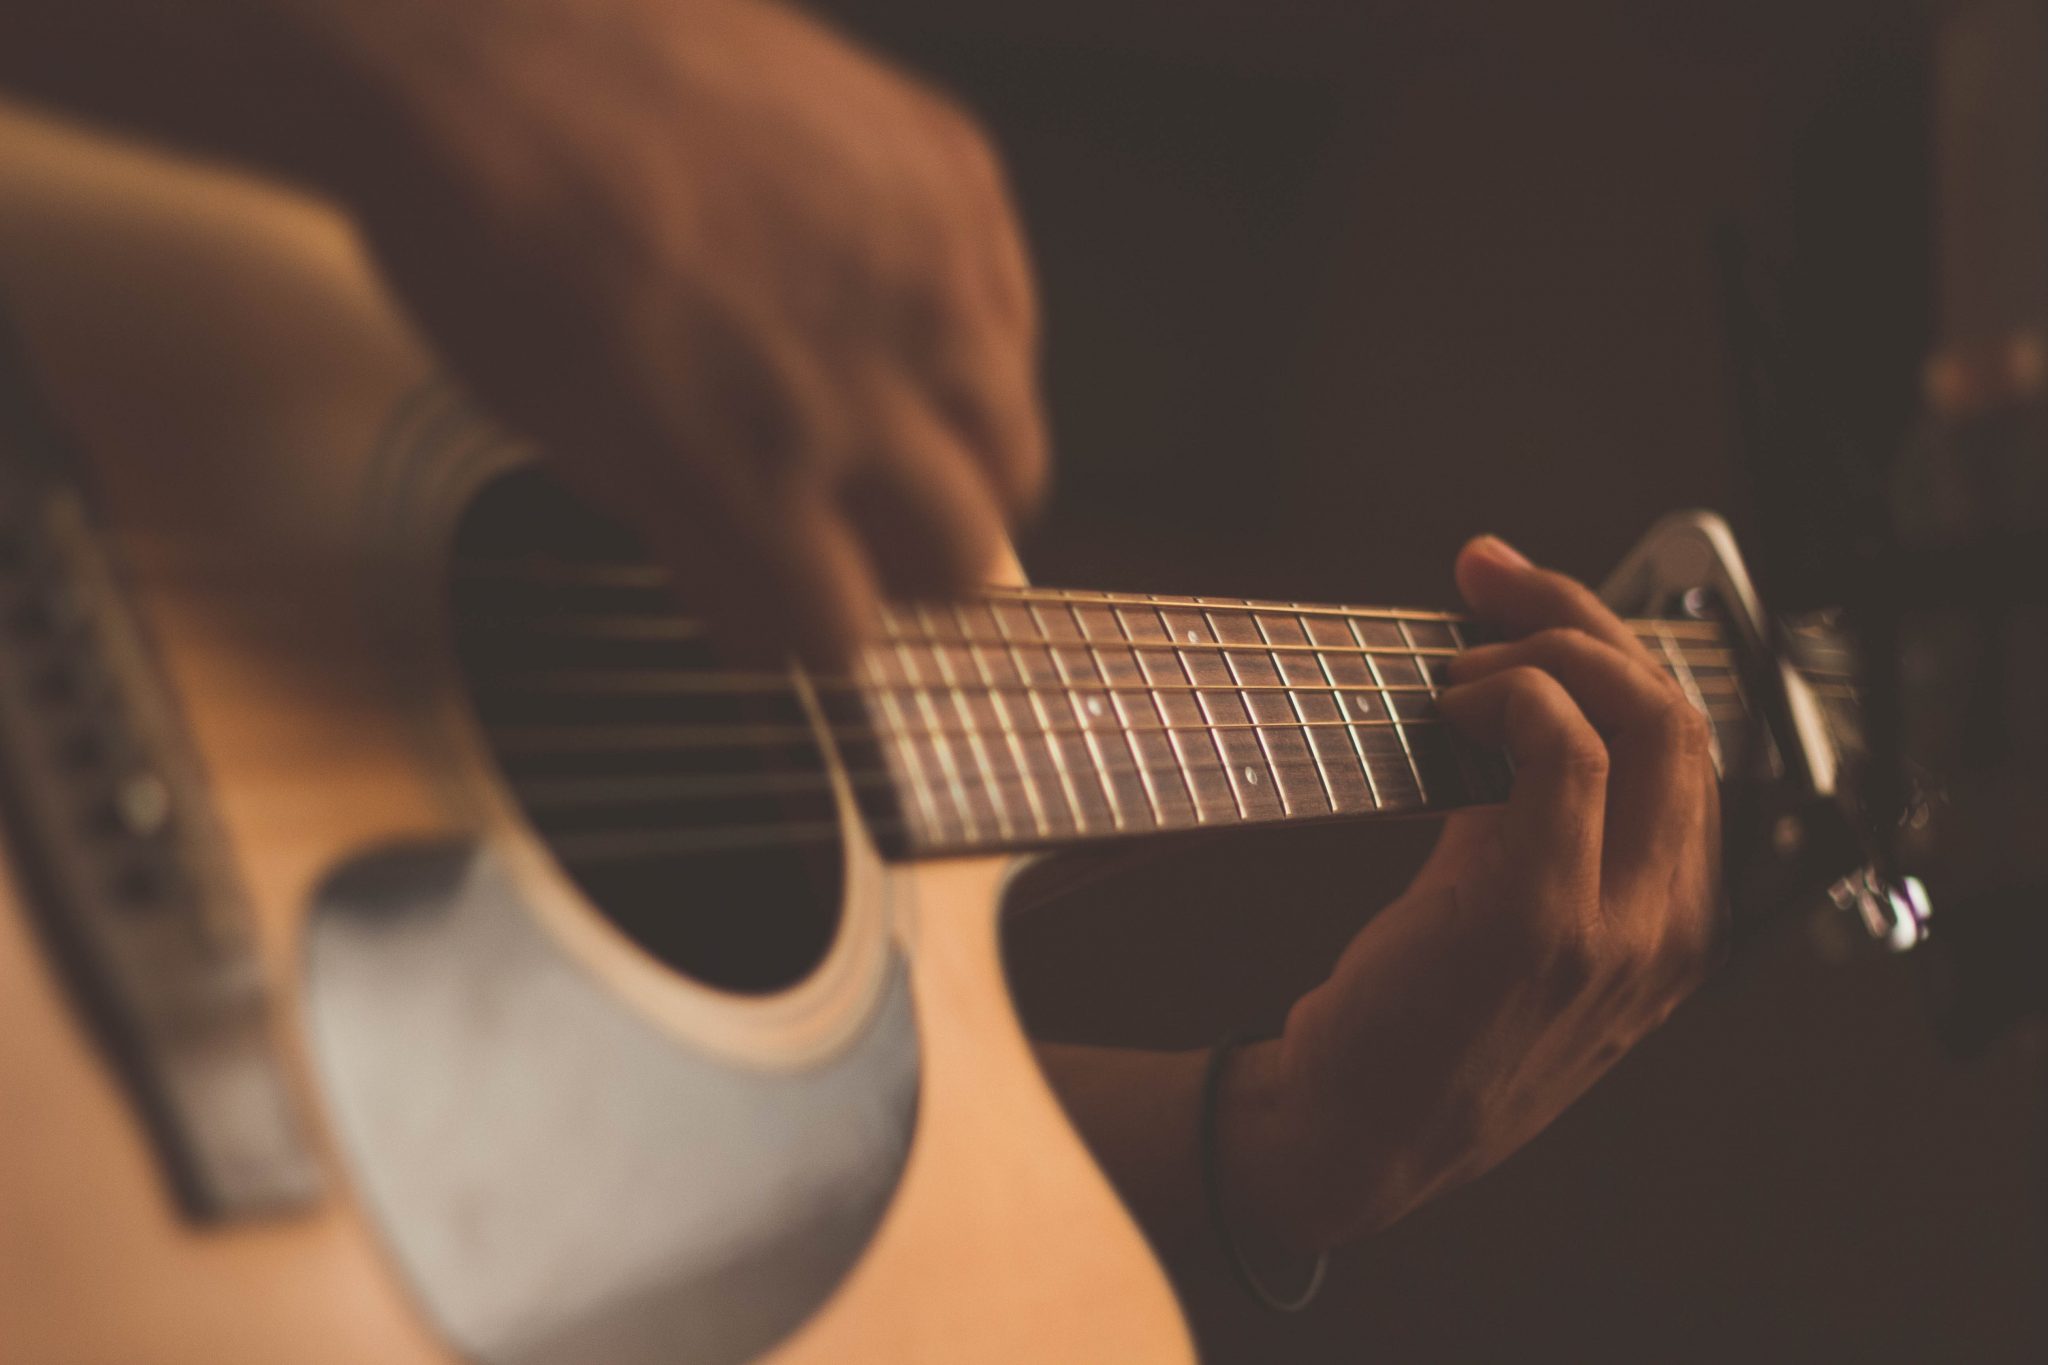 Acoustic guitar closeup